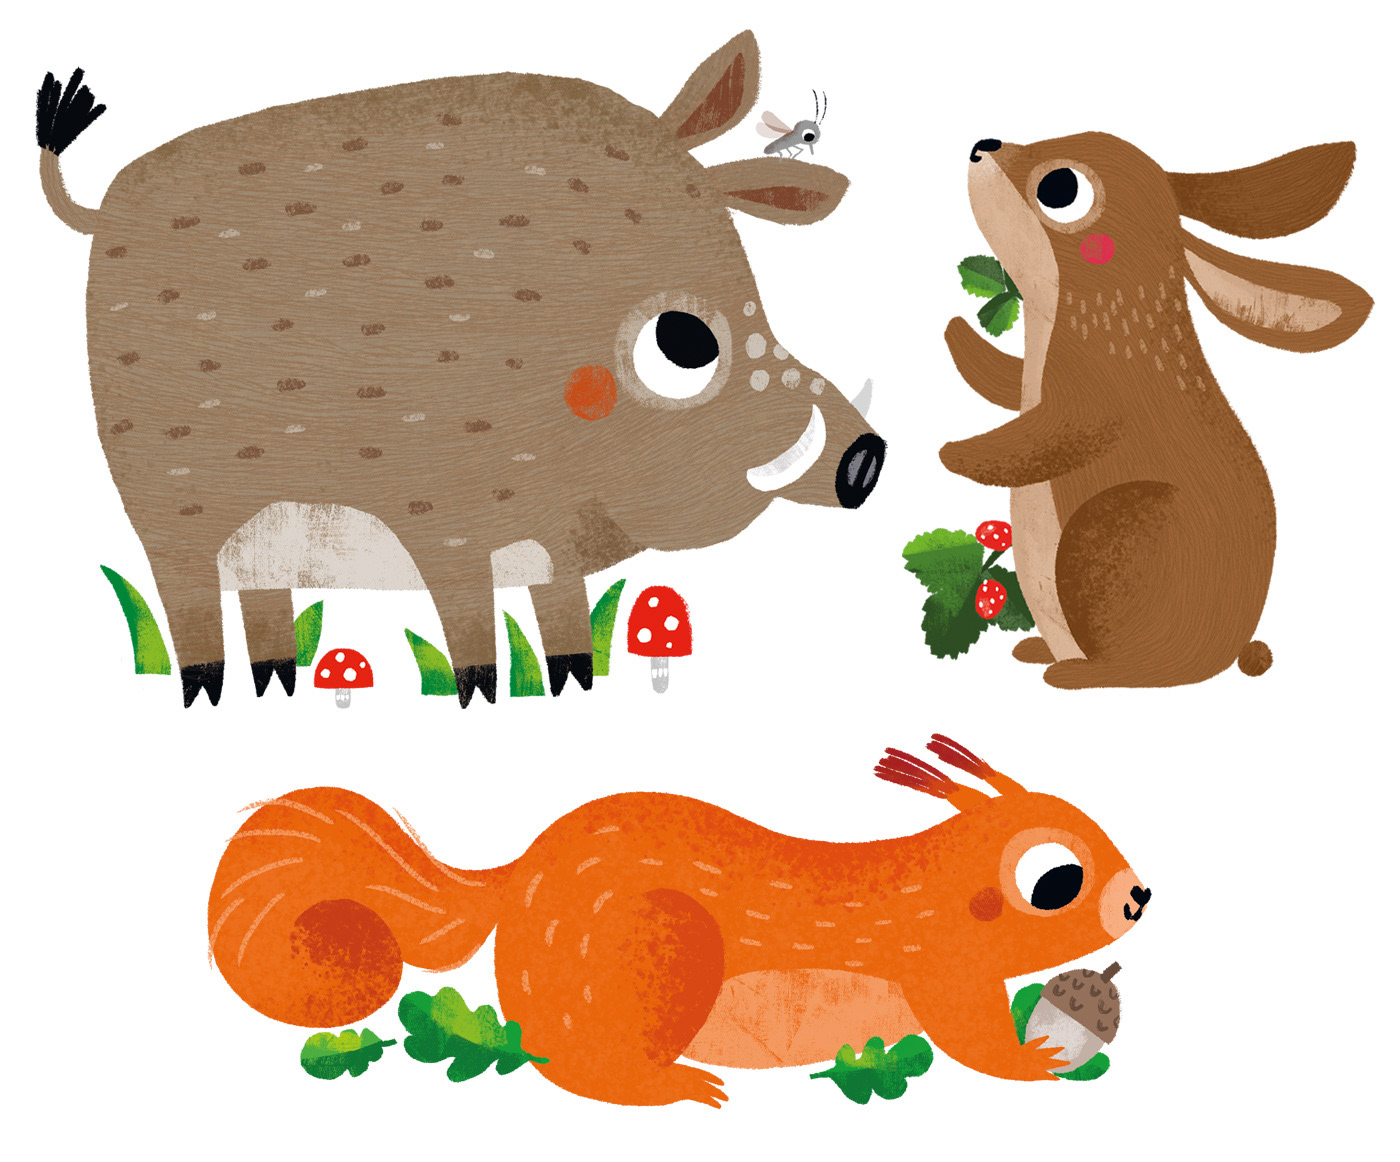 animals children illustration forest forest animals FOX Hedgehog kids illustration puzzle toys toys design